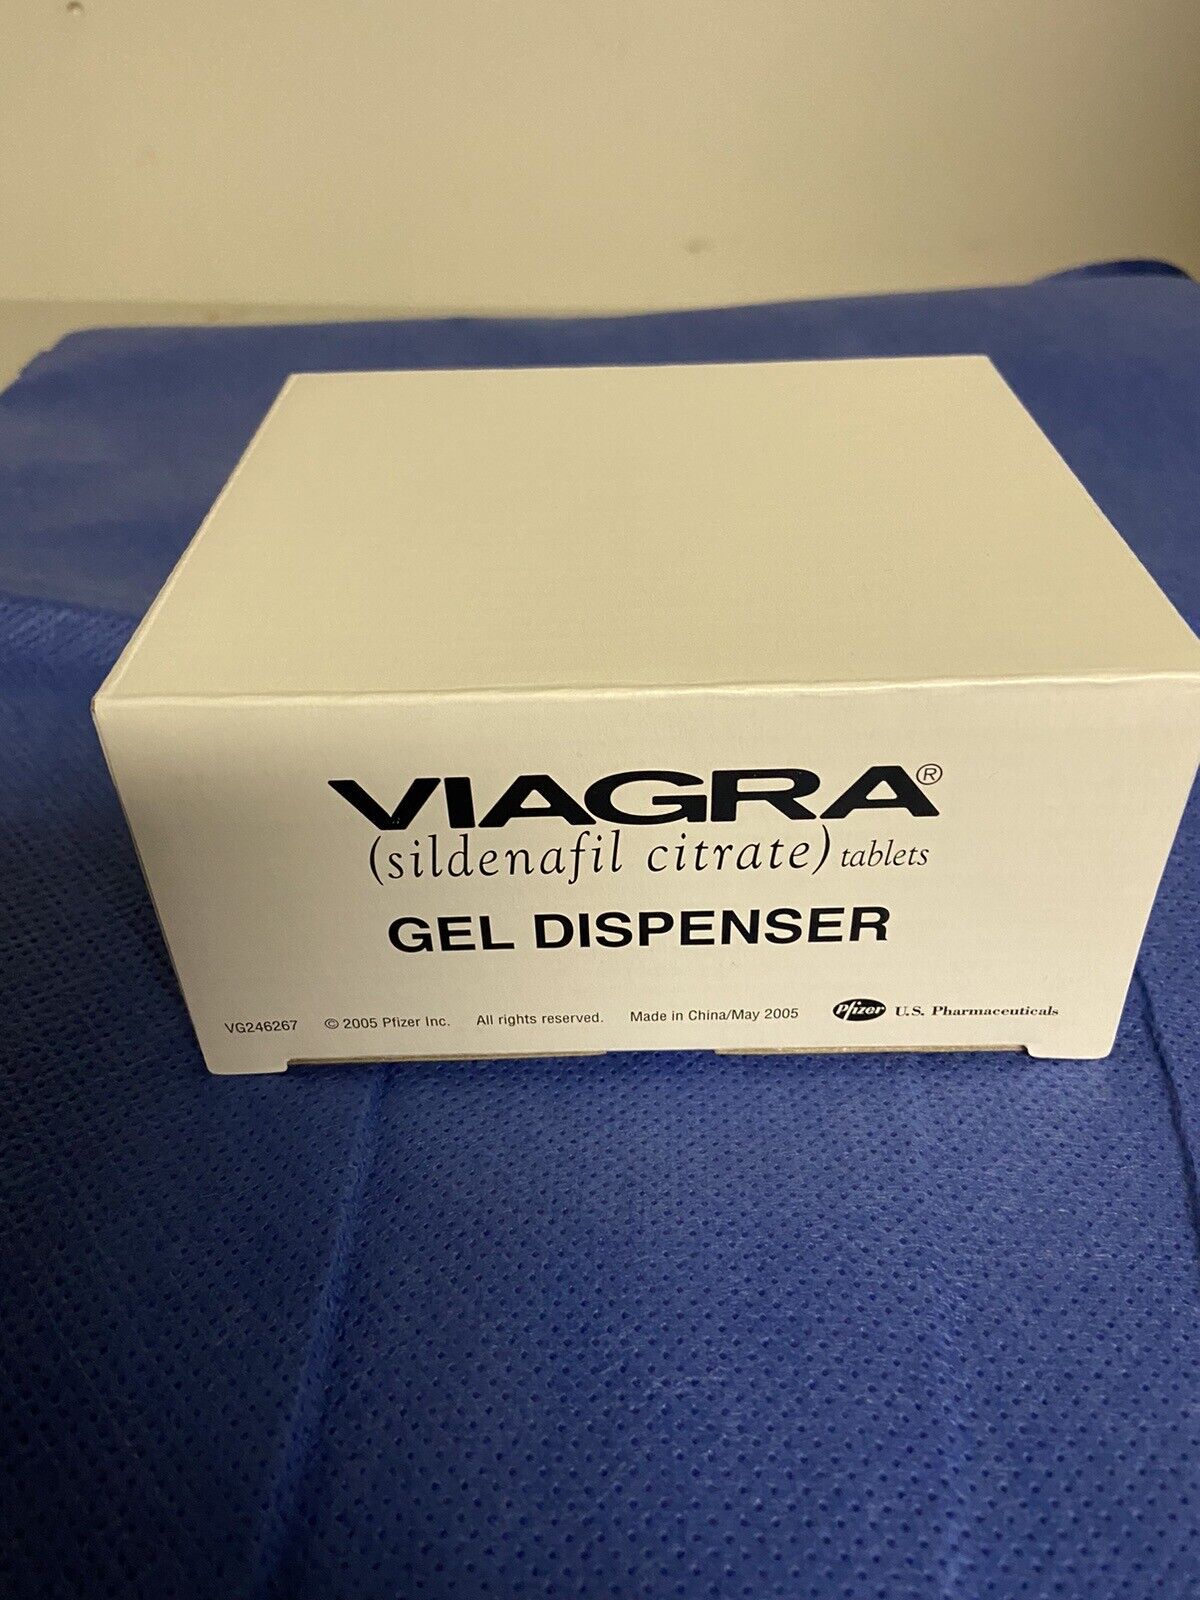 VINTAGE VIAGRA - New In Box Refillable Soap Pump Novelty Dispenser Pfizer